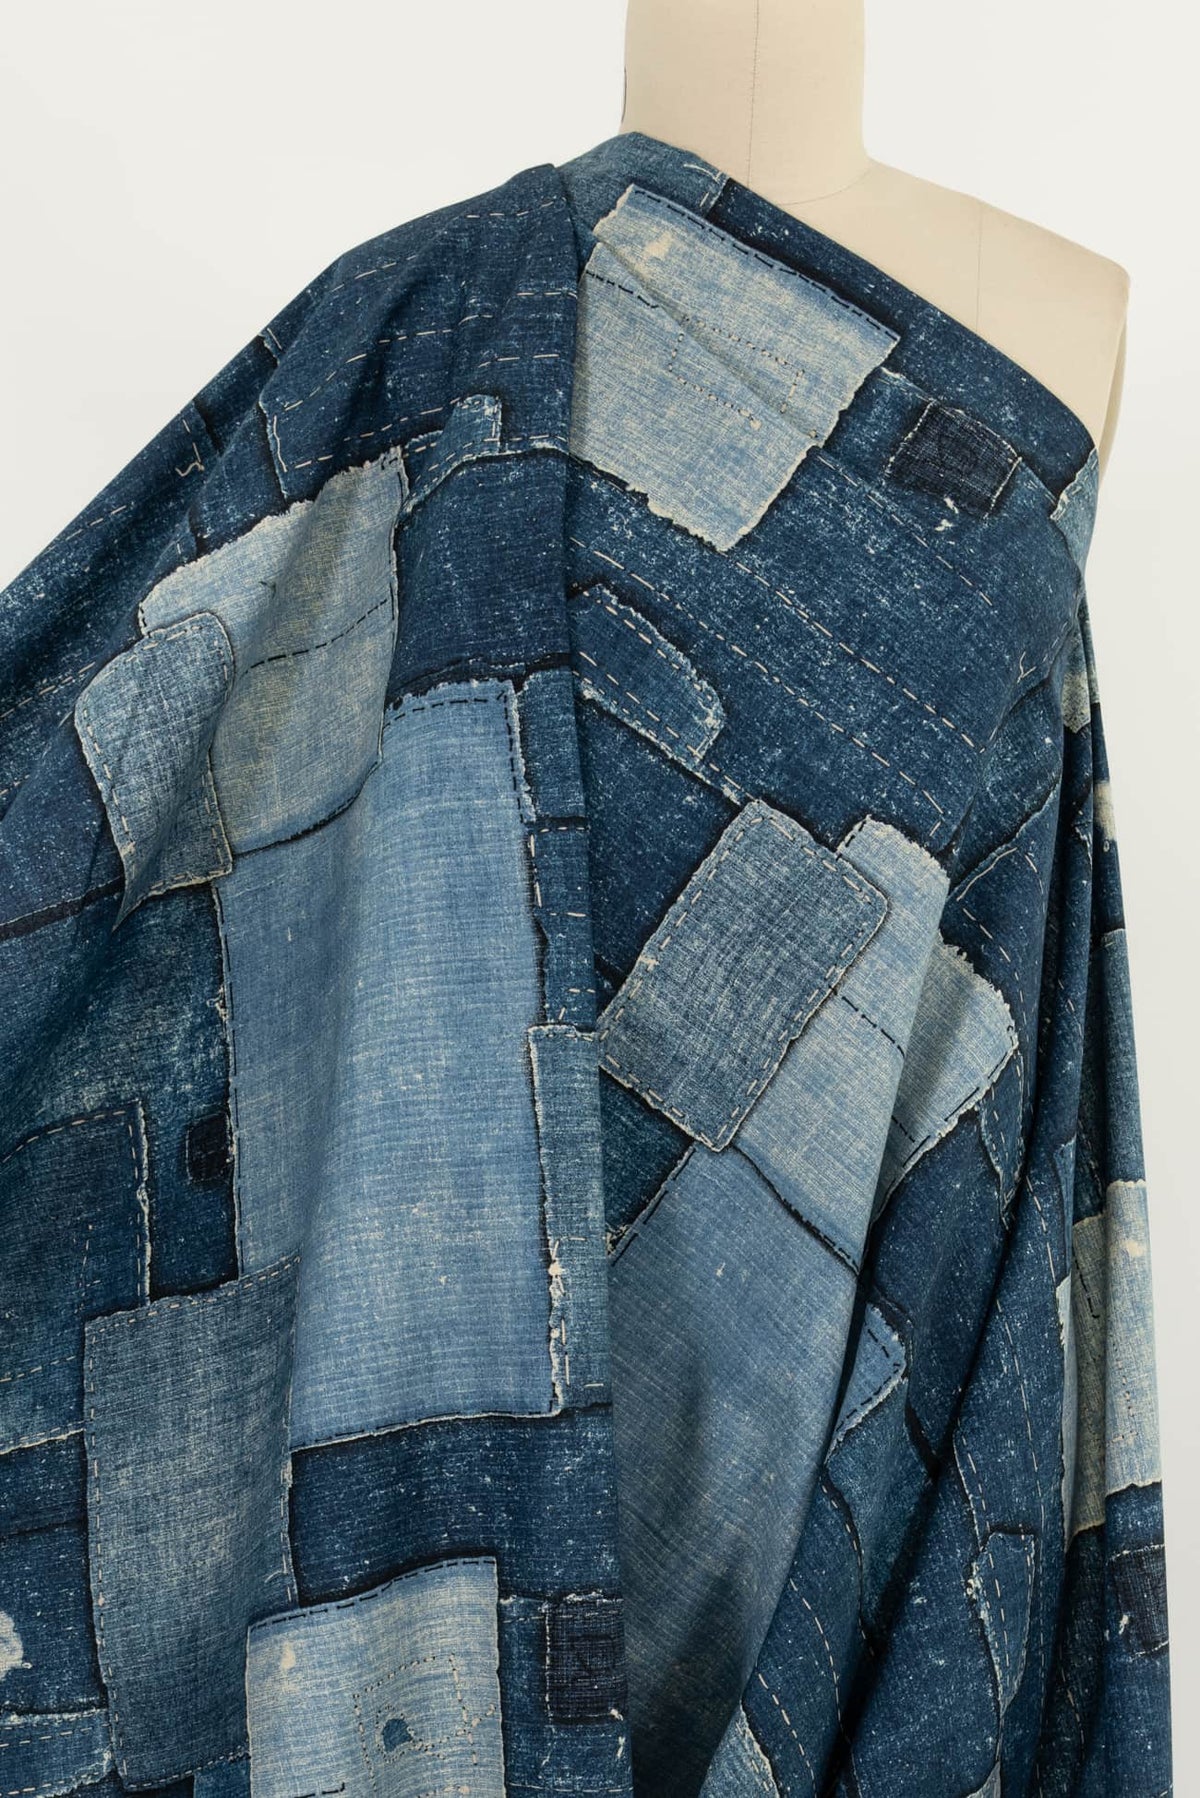 Blue Faux Boro Japanese Cotton Woven - Marcy Tilton Fabrics